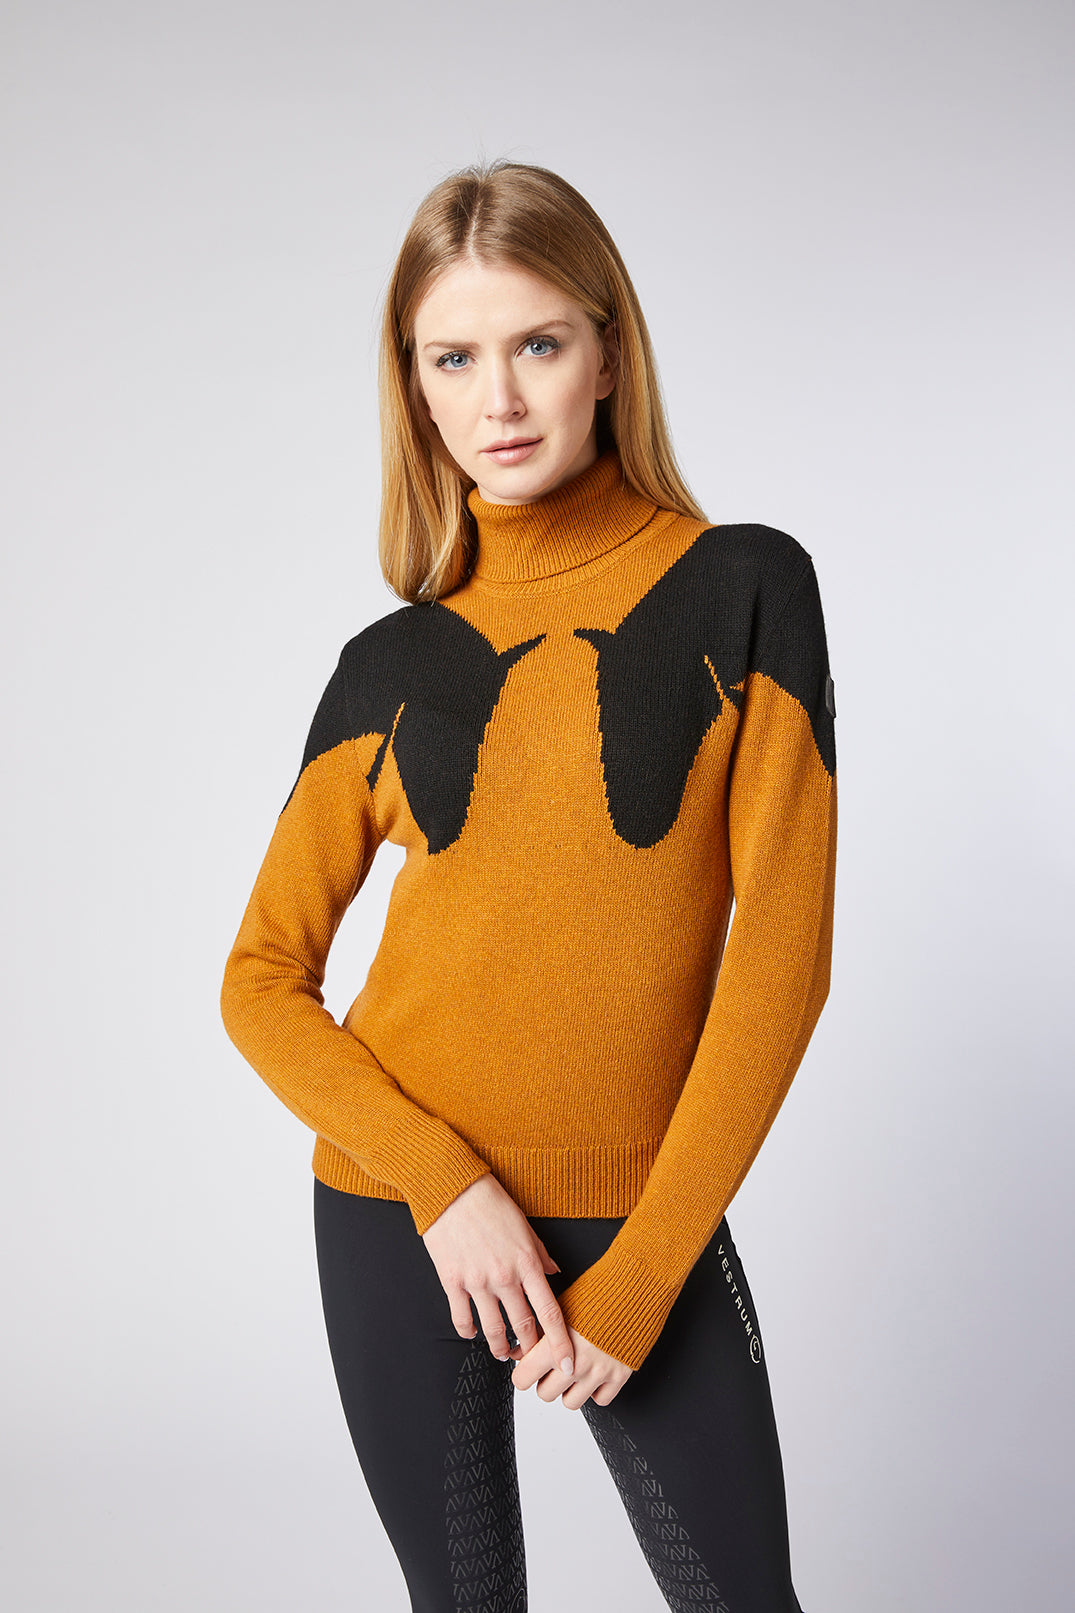 Vestrum corona turtleneck sweater